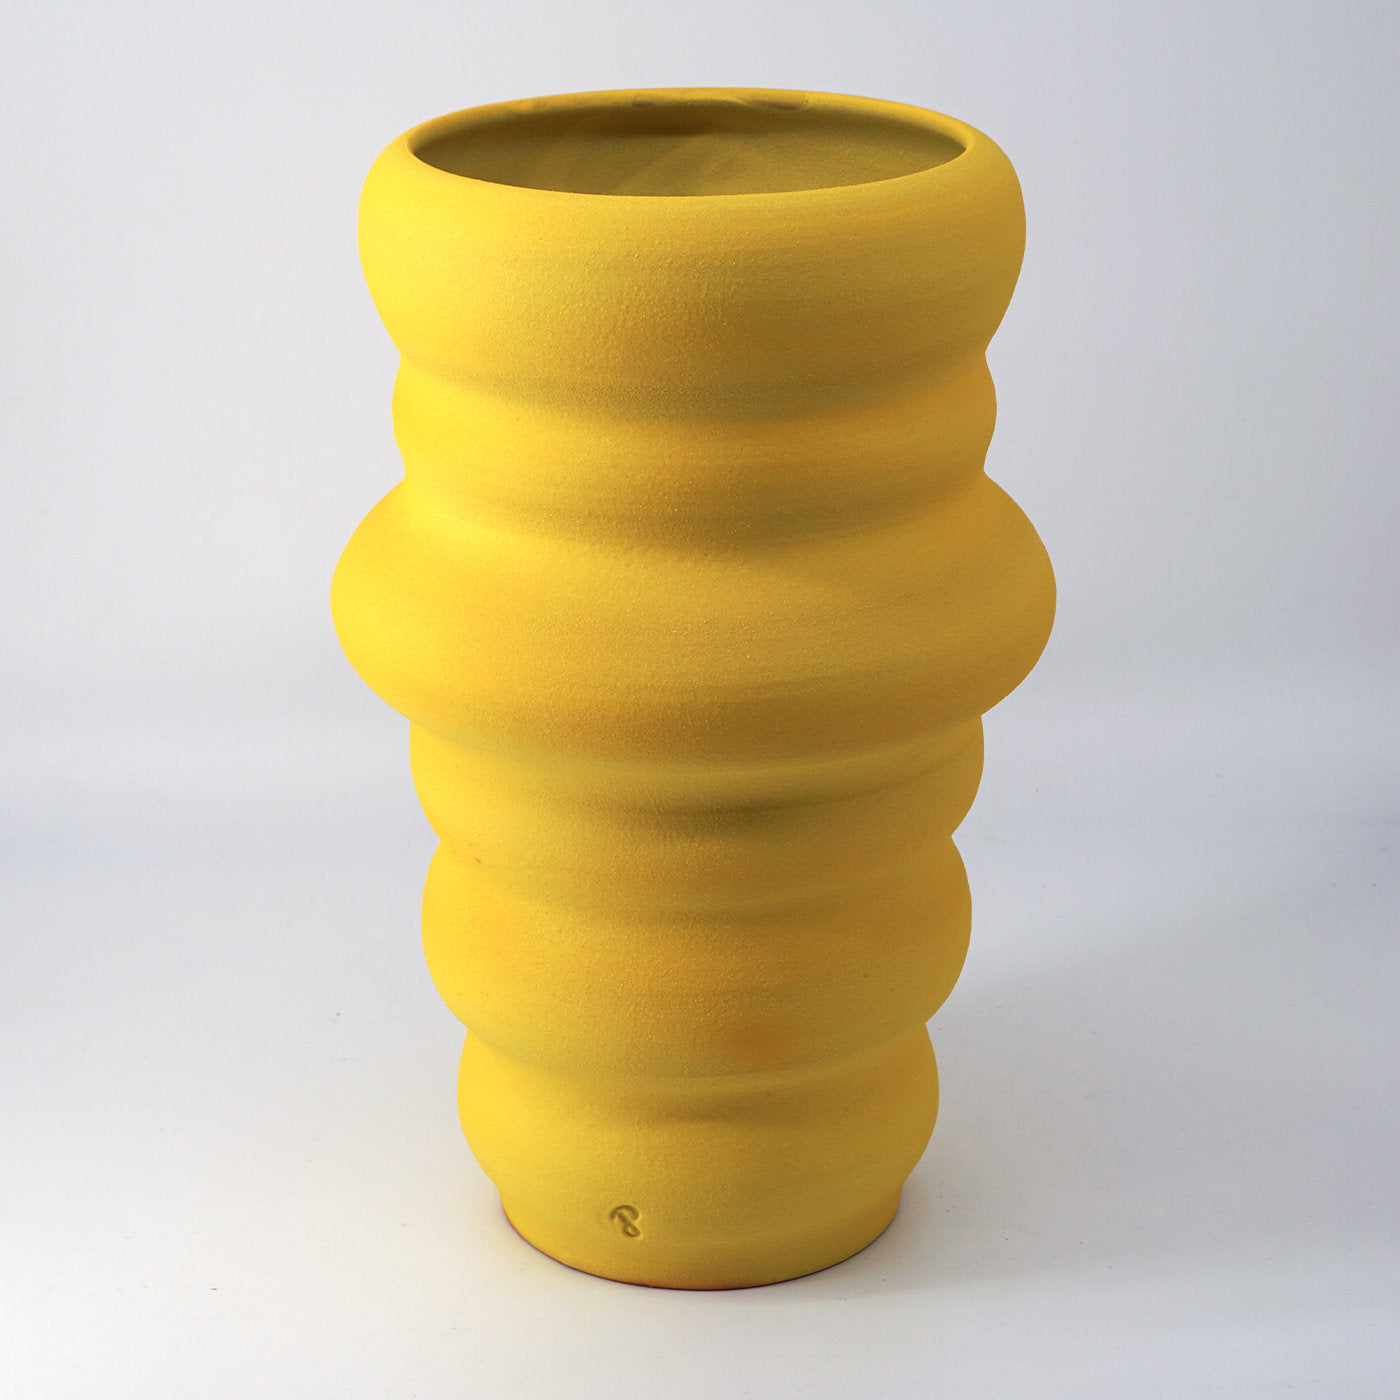 Crisalide Yellow Vase #4 - Alternative view 1